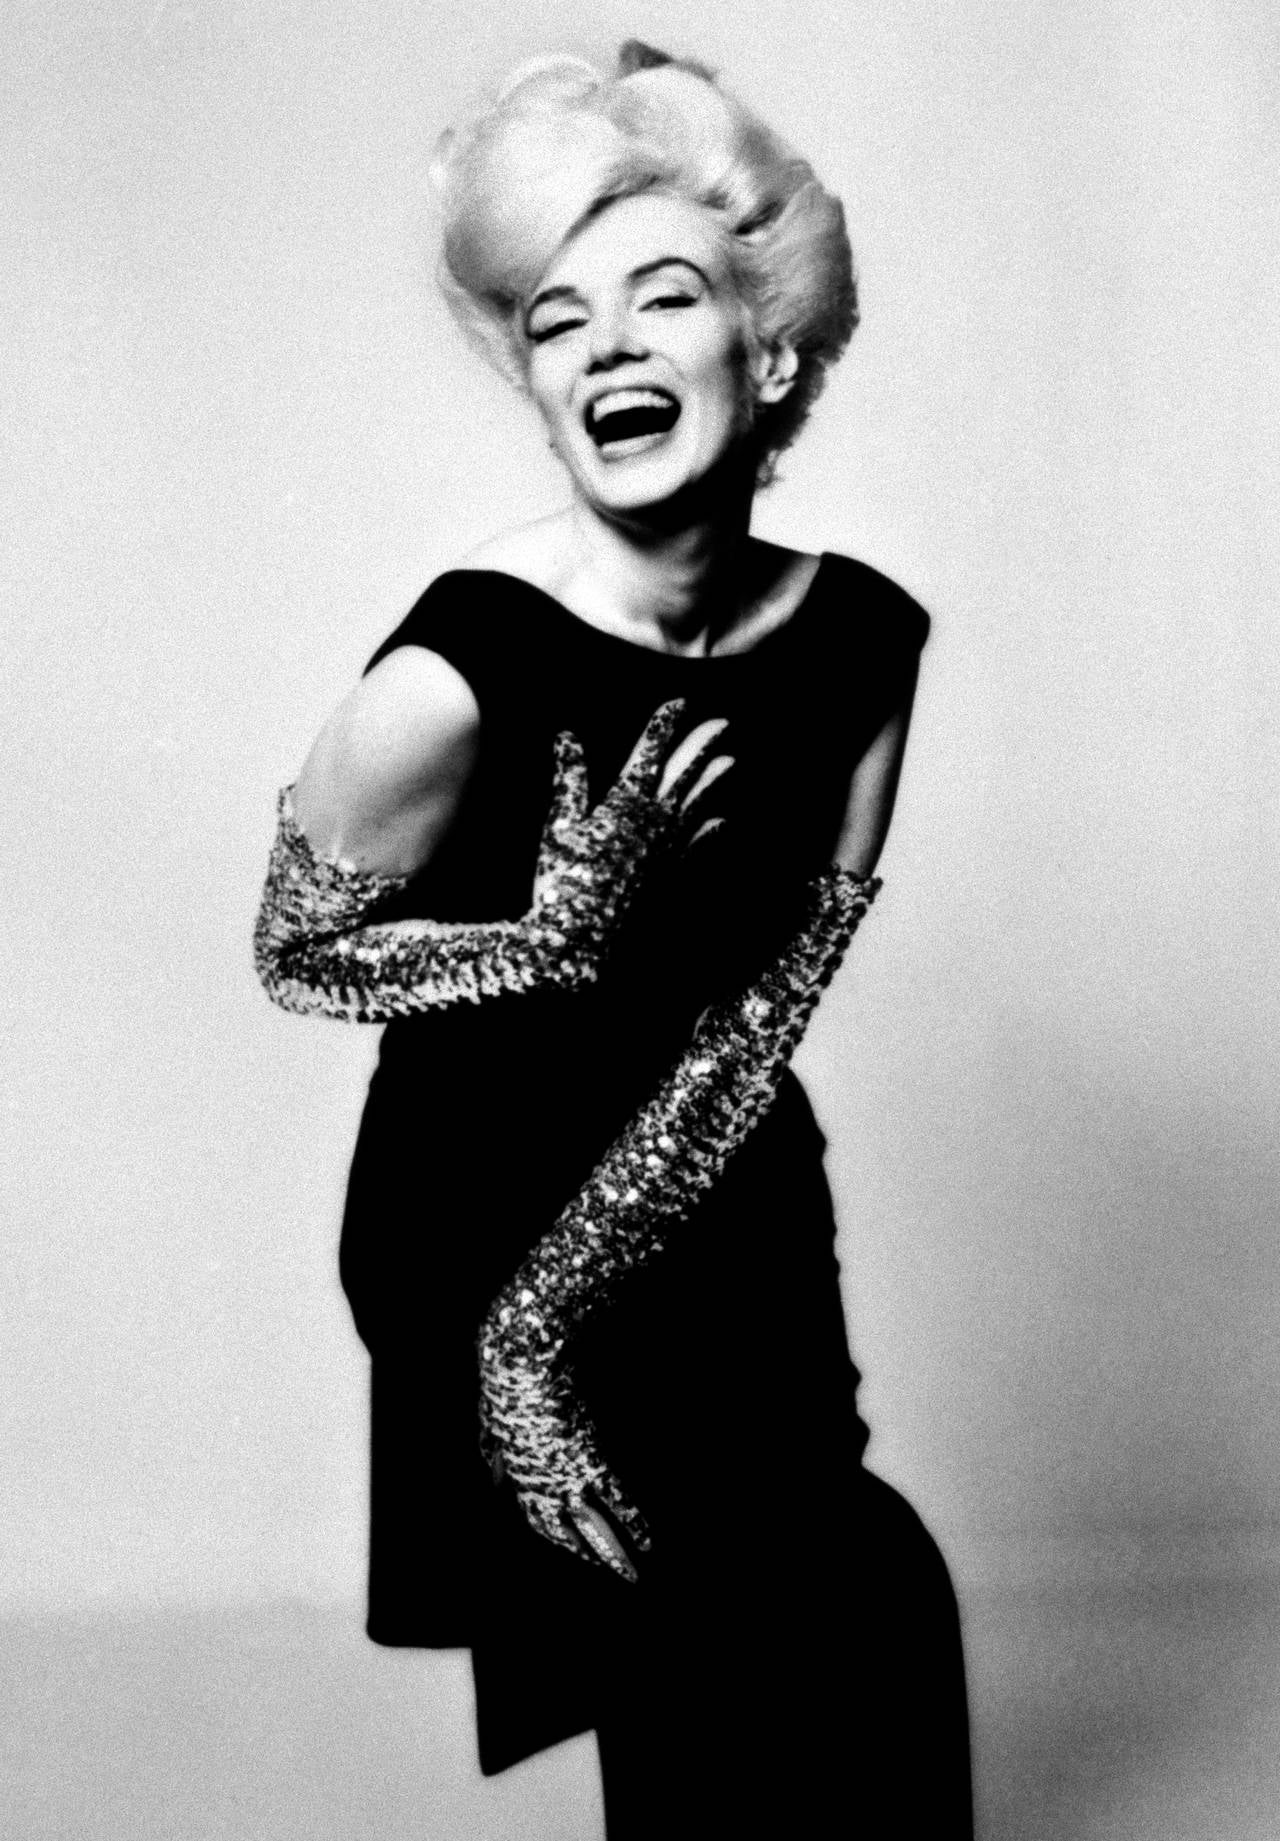 Bert Stern - Marilyn Monroe: From “The Last Sitting”, 1962, Photograph ...